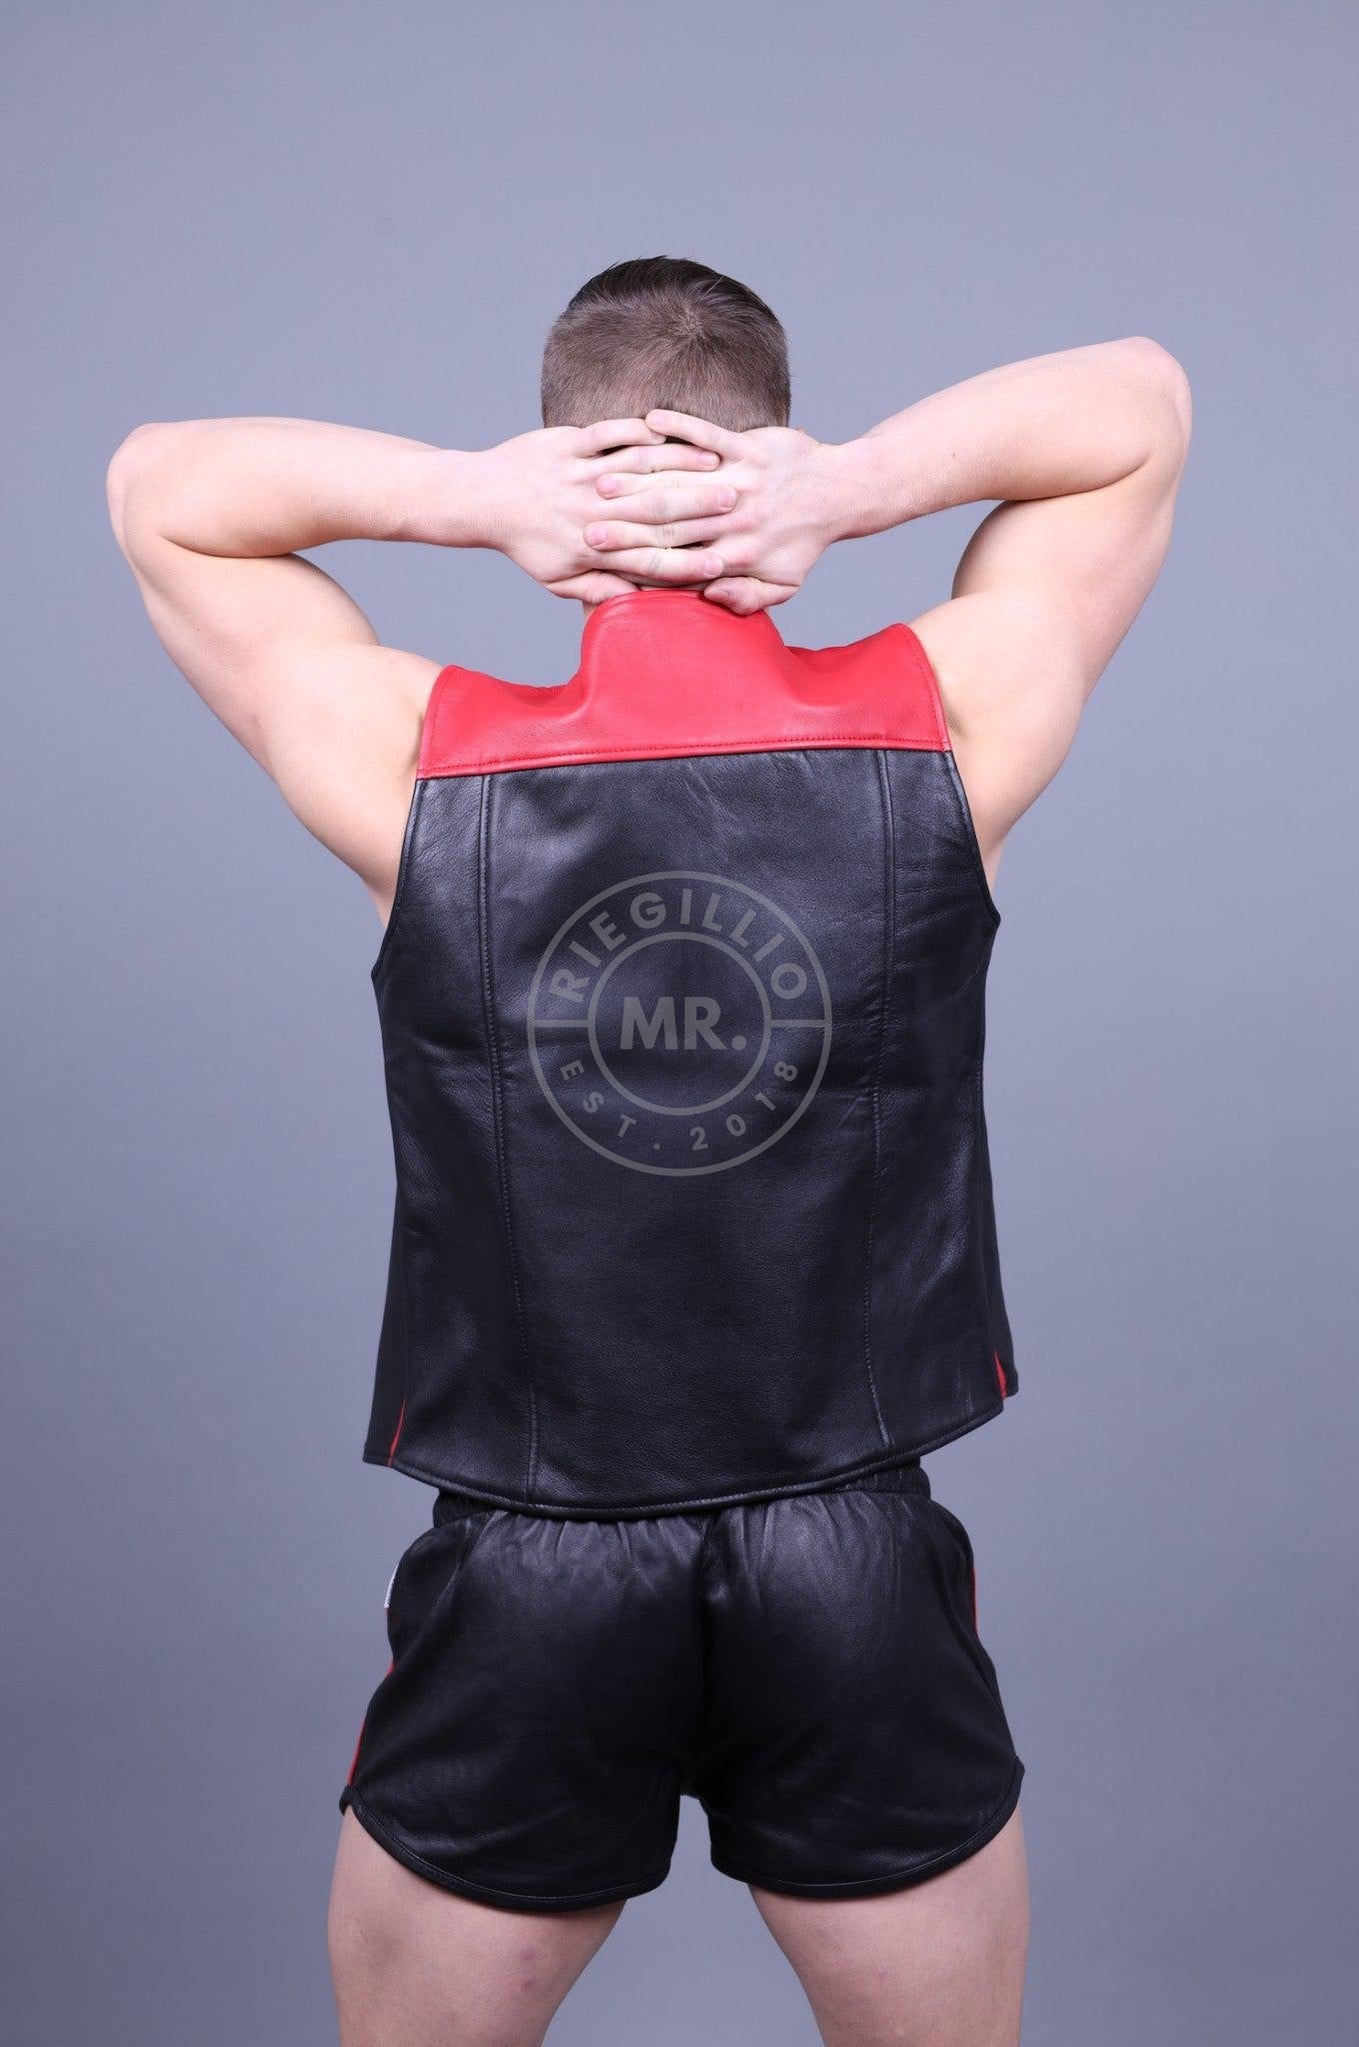 Leather Zipper Vest - Red Panels-at MR. Riegillio